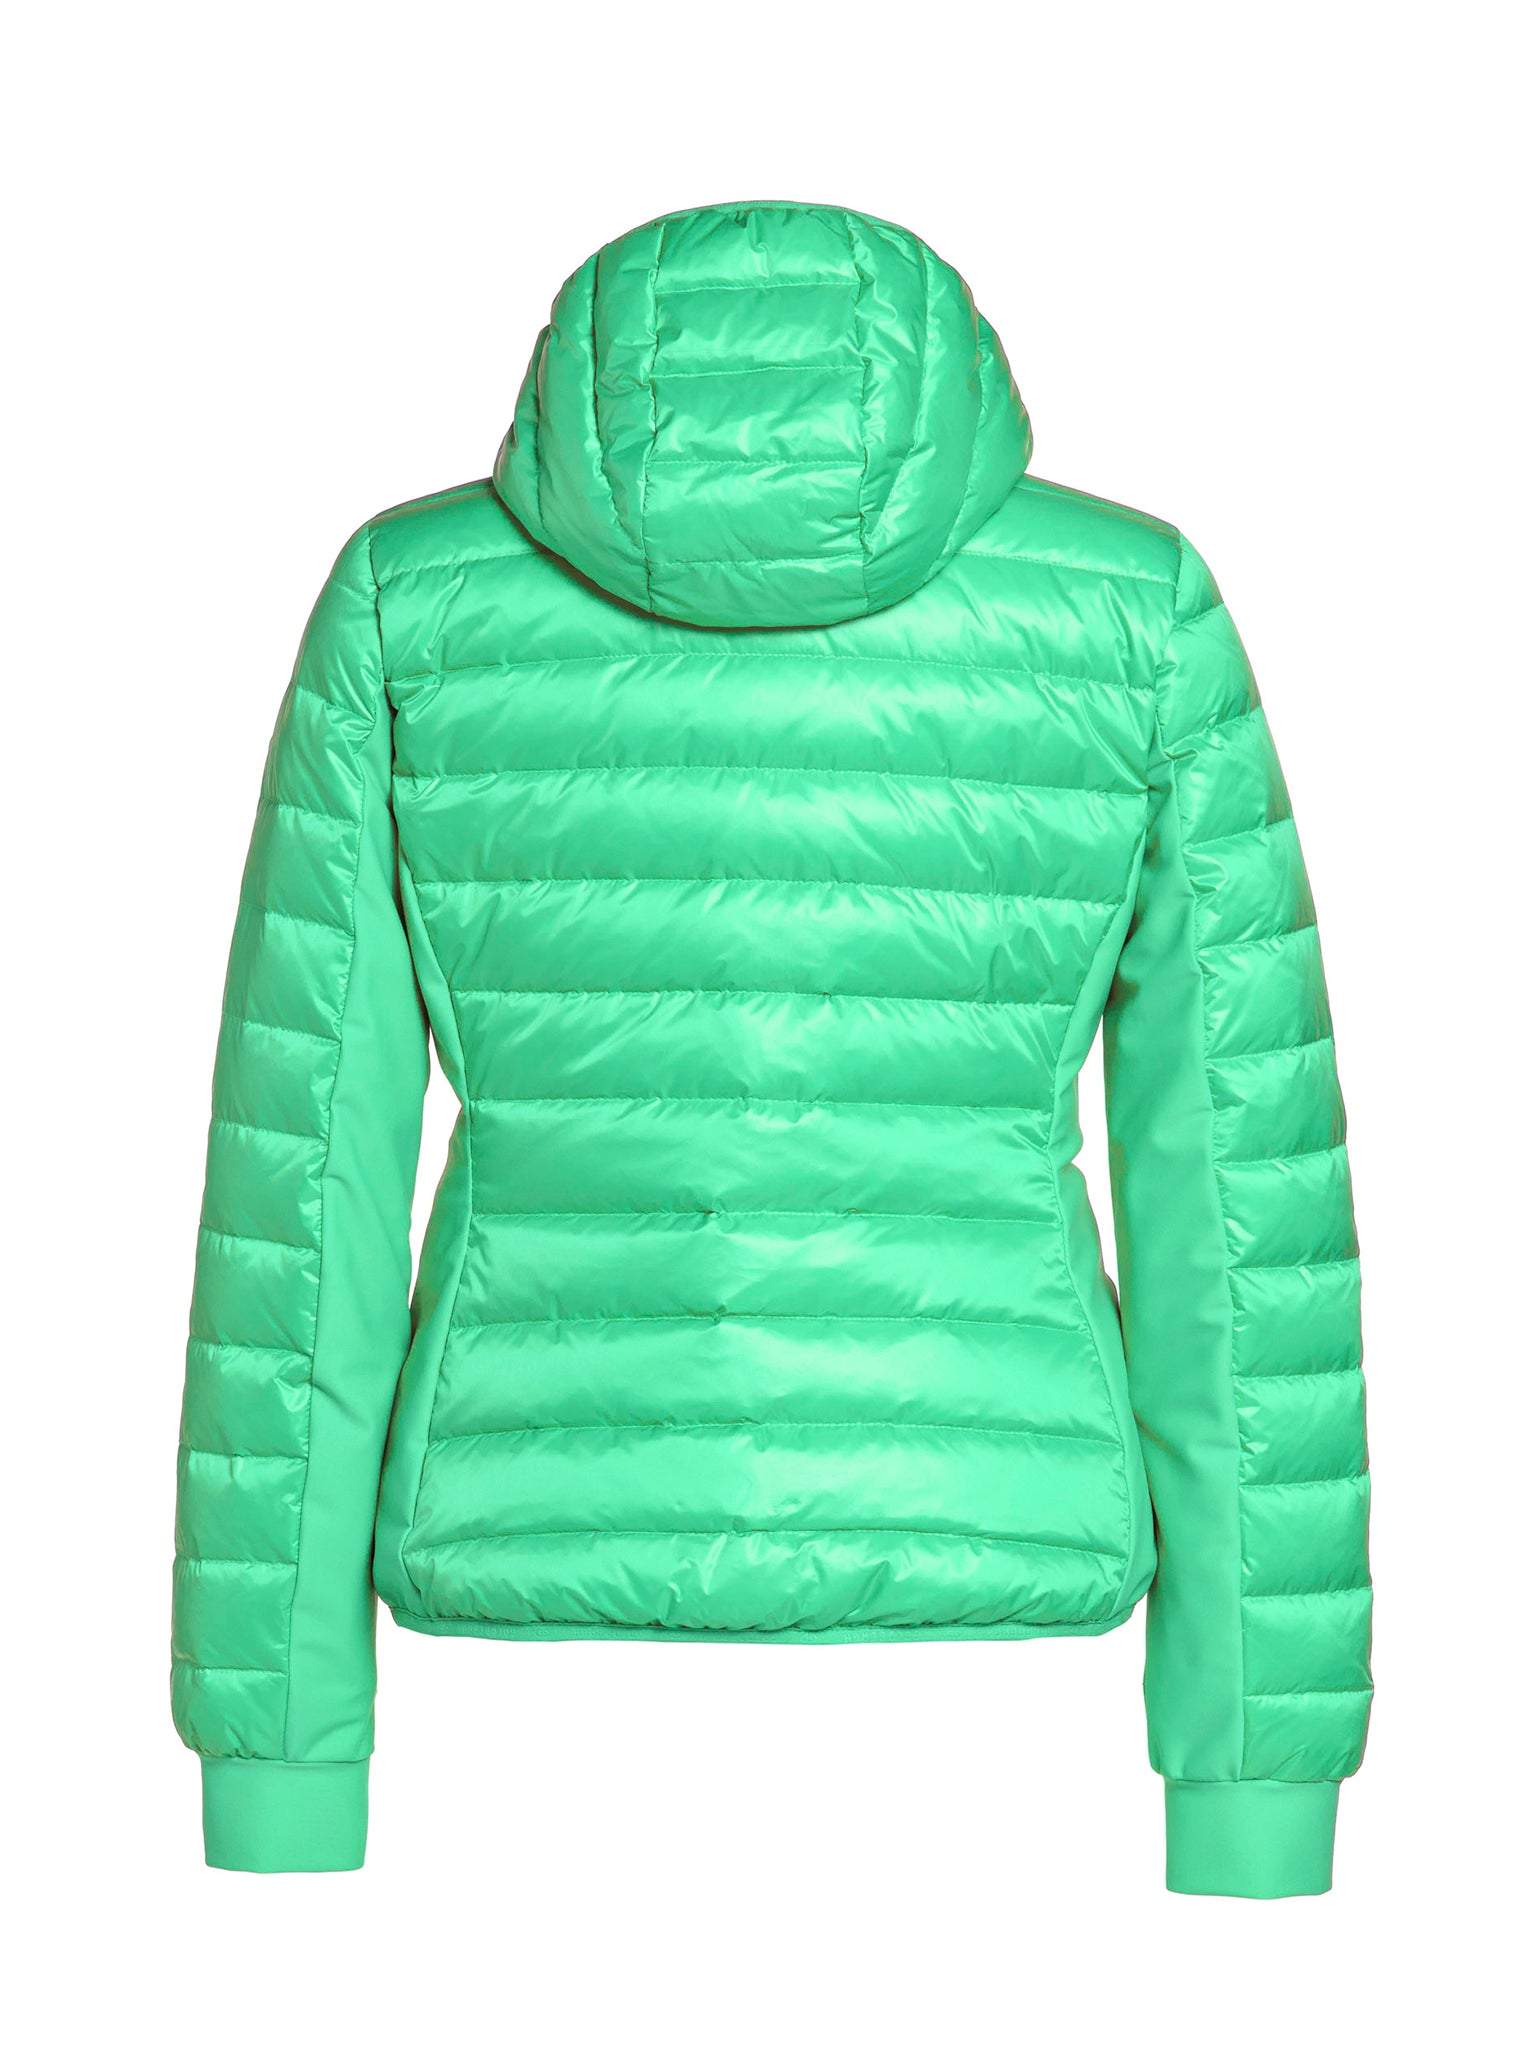 Nadia spring jacket - Goldbergh GBL03-11-231 green